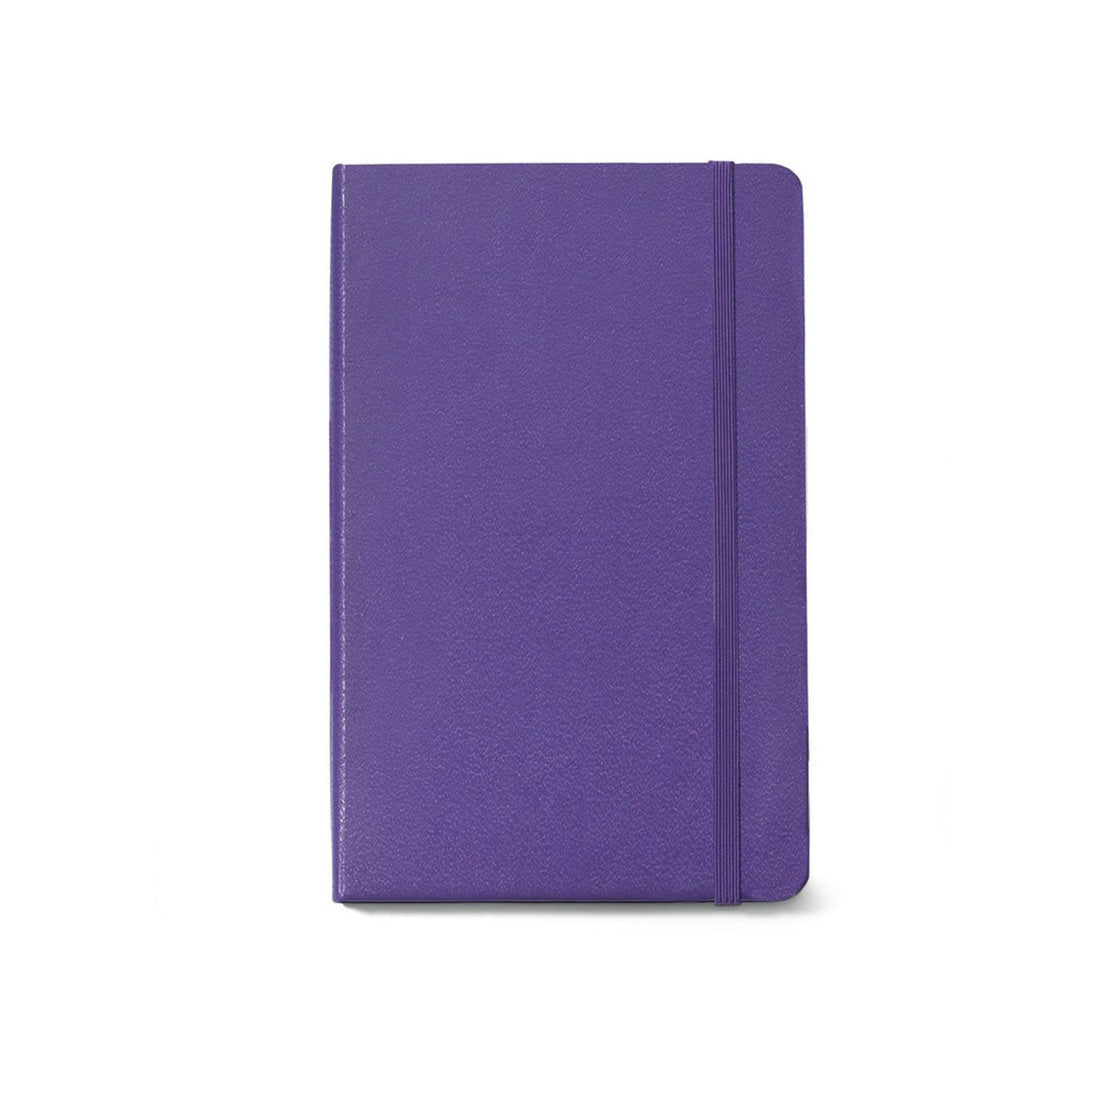 Moleskine Classic Hard Cover Large Ruled Notebook Brilliant Violet